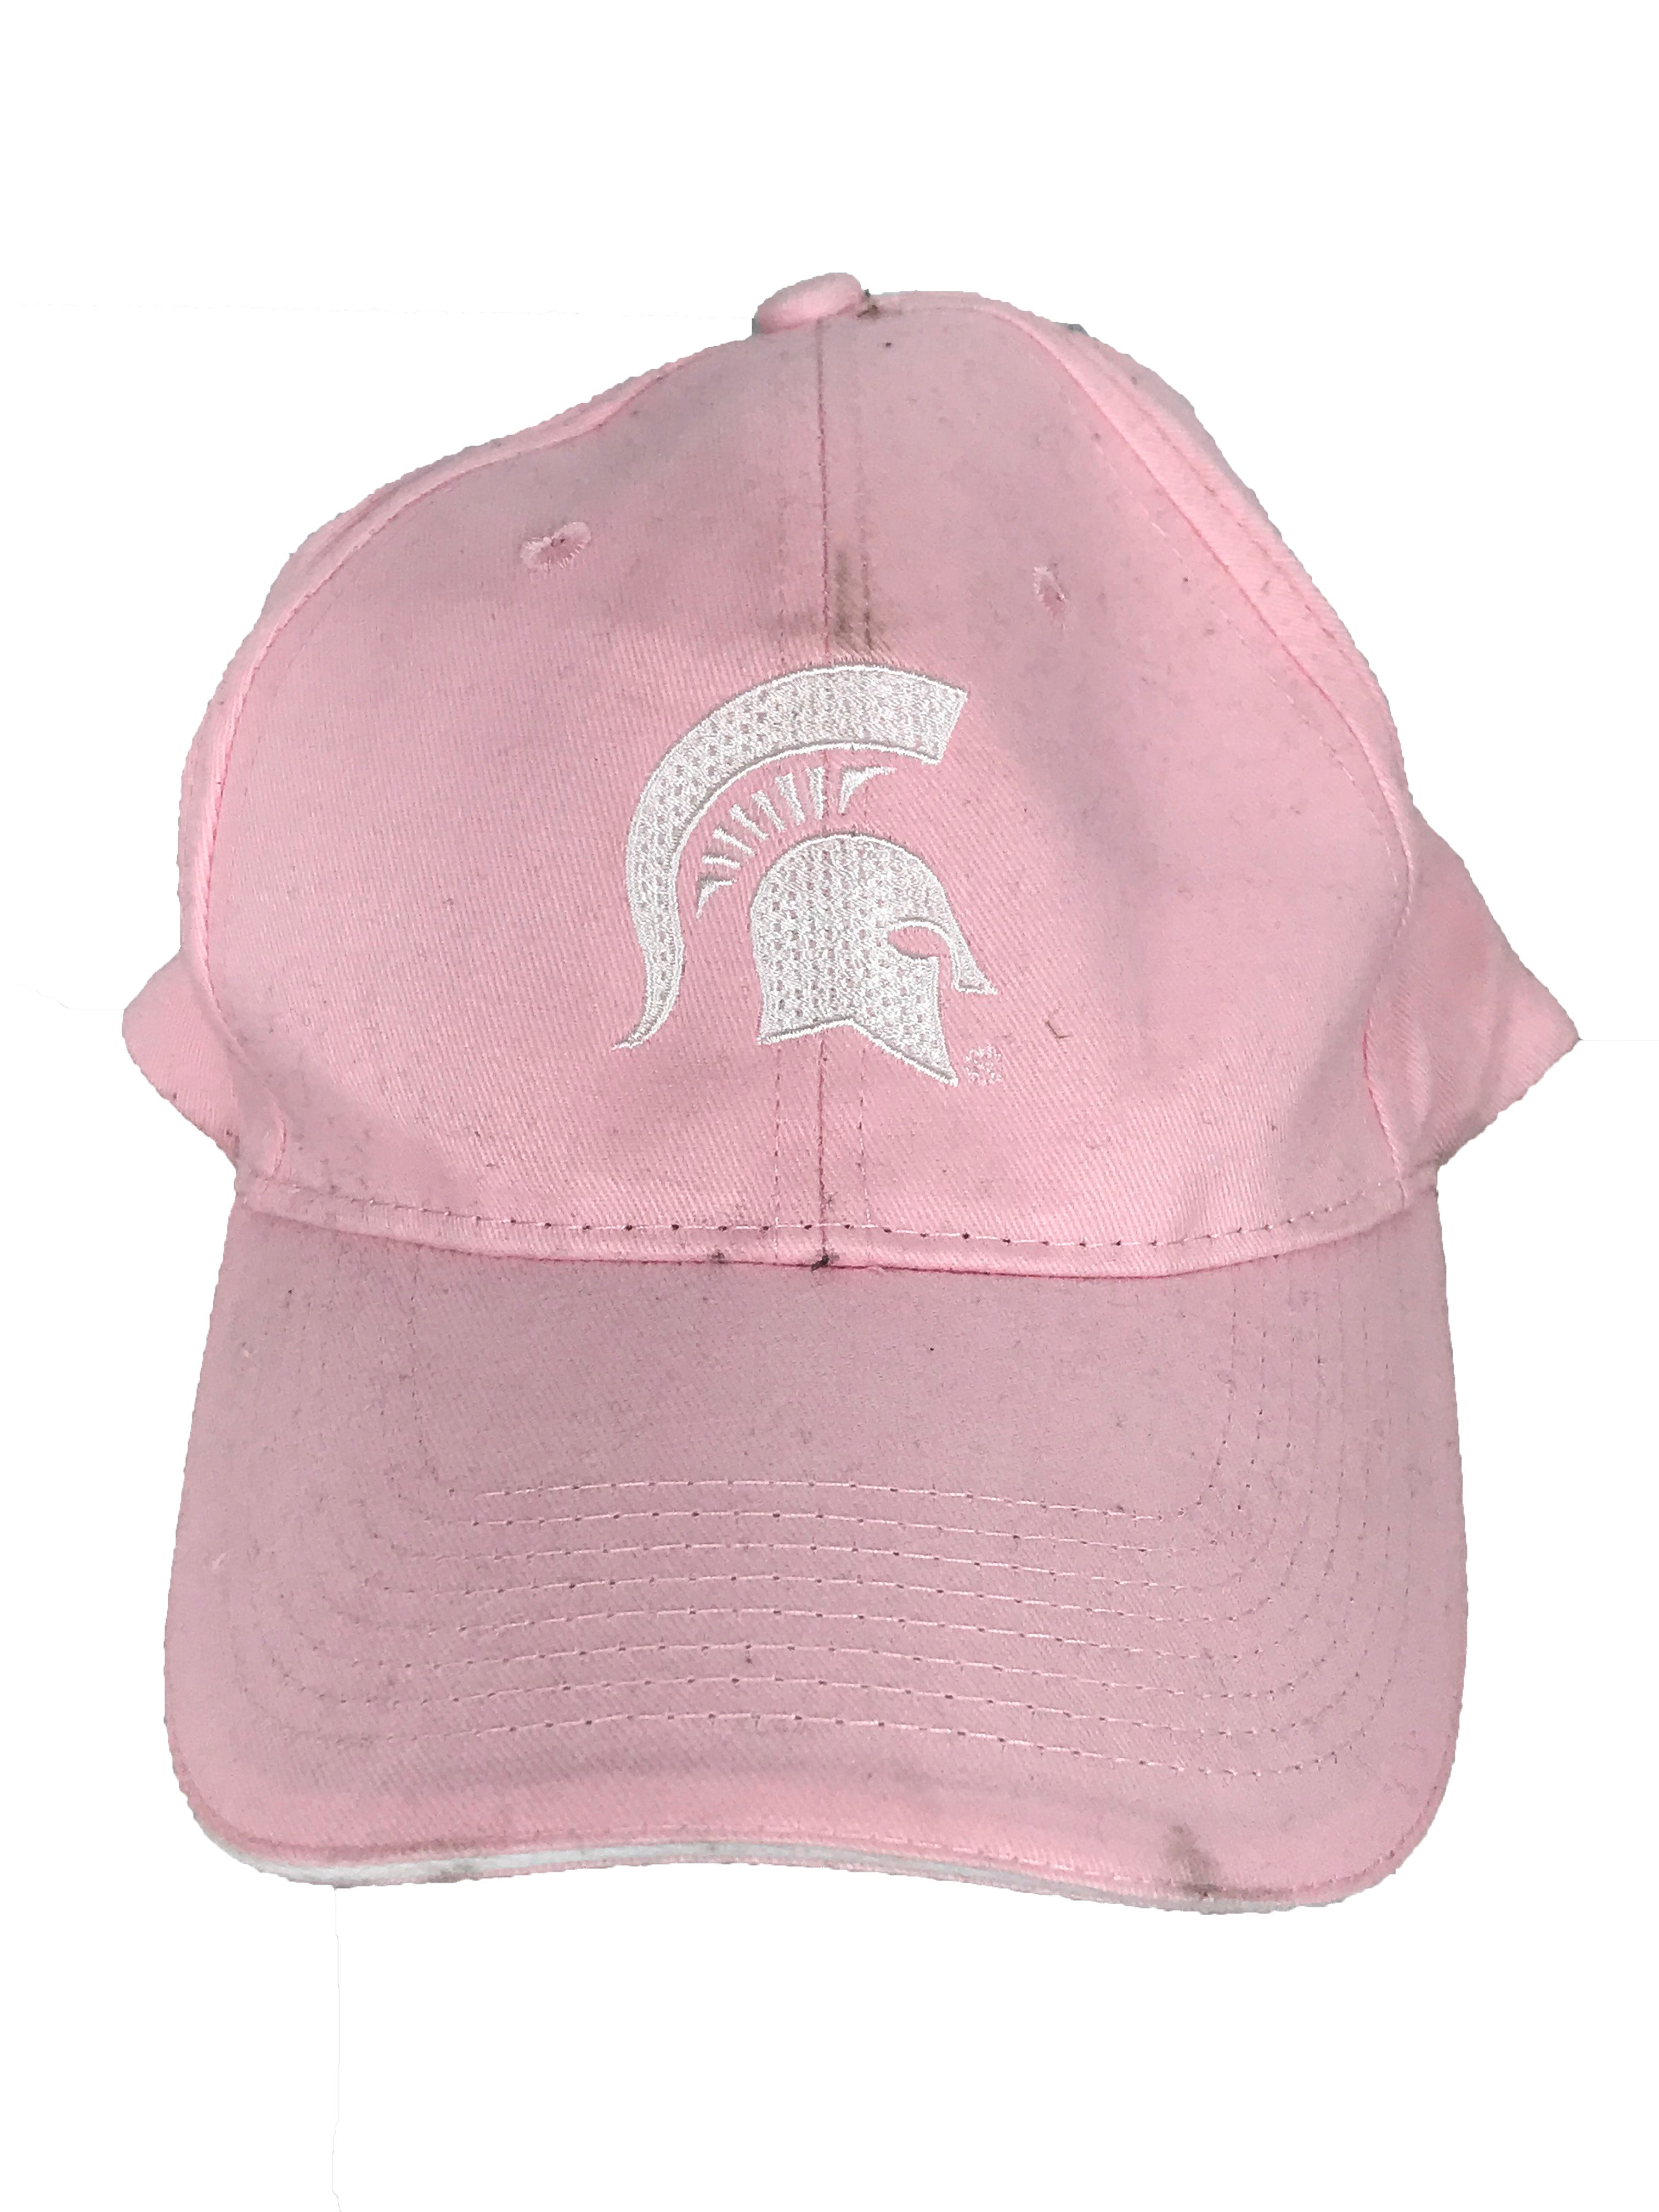 Michigan State University Pink Hat